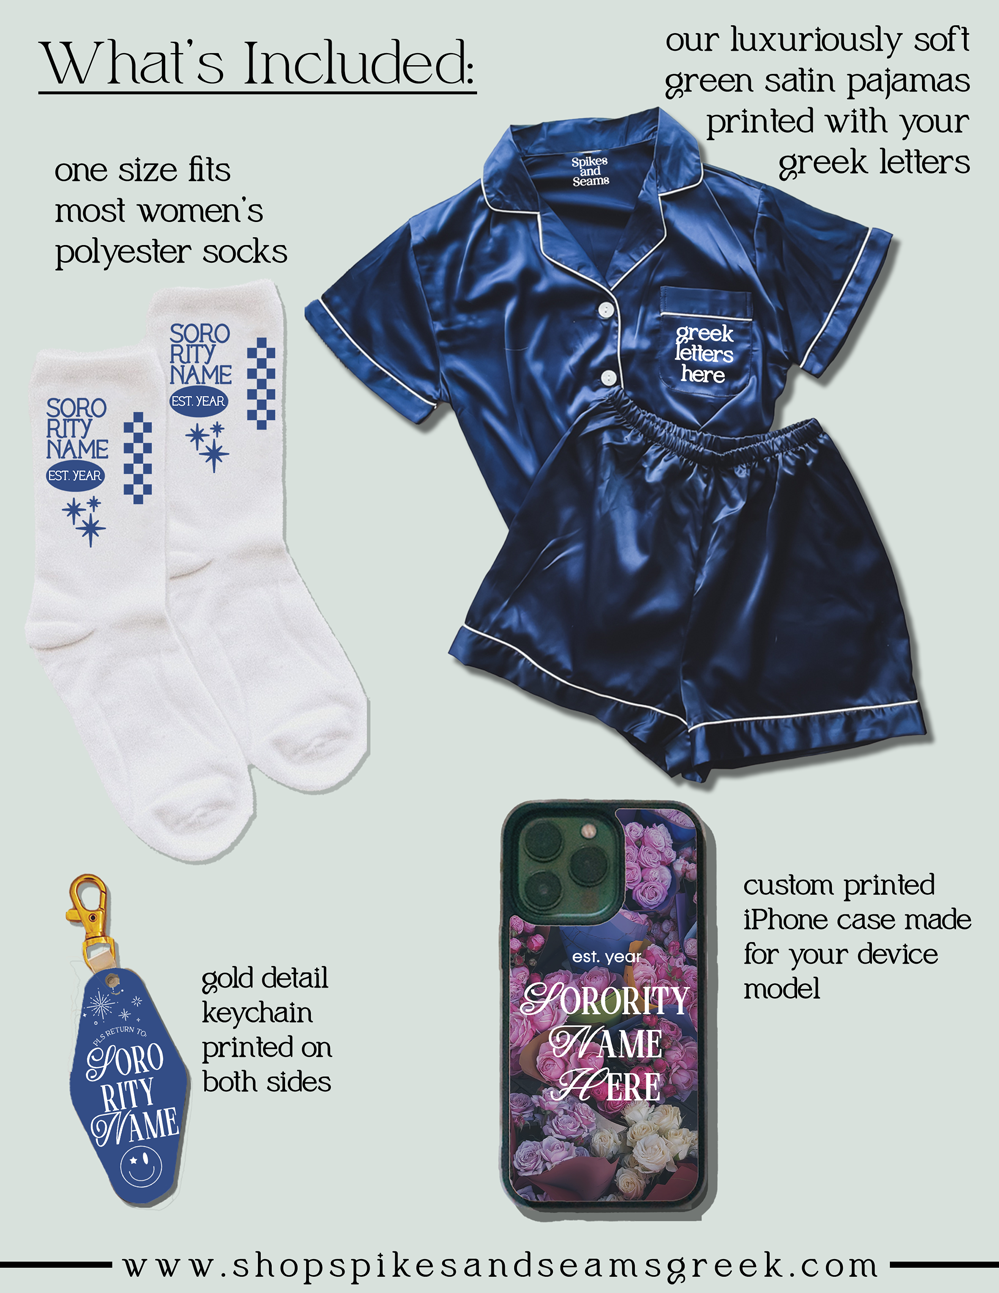 Navy Pajamas Gift Box - Kappa Alpha Theta